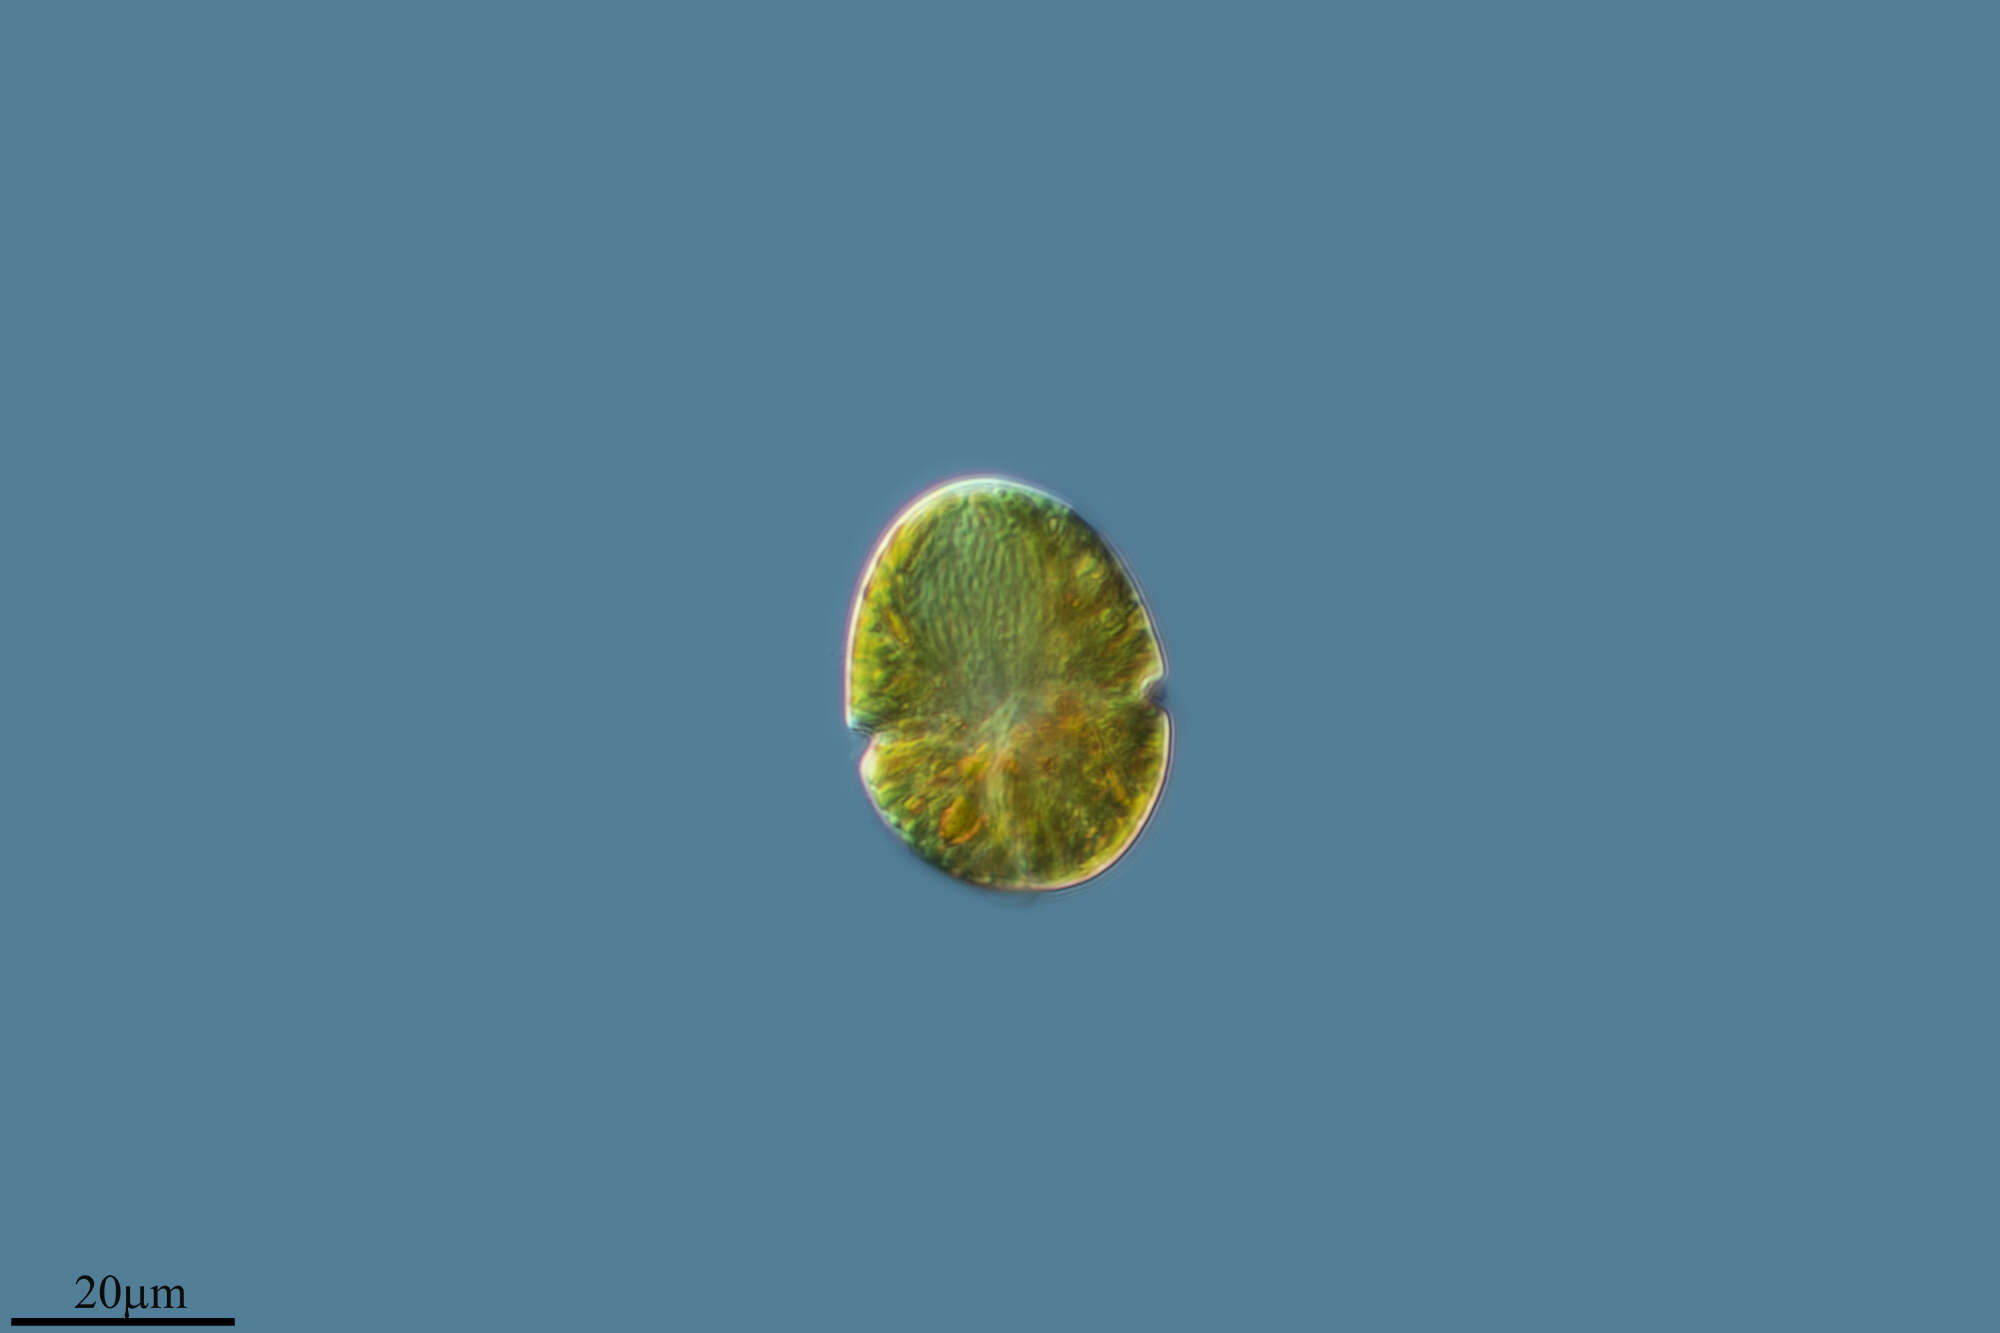 Image of SAR (Stramenopiles, Alveolates, Rhizaria)